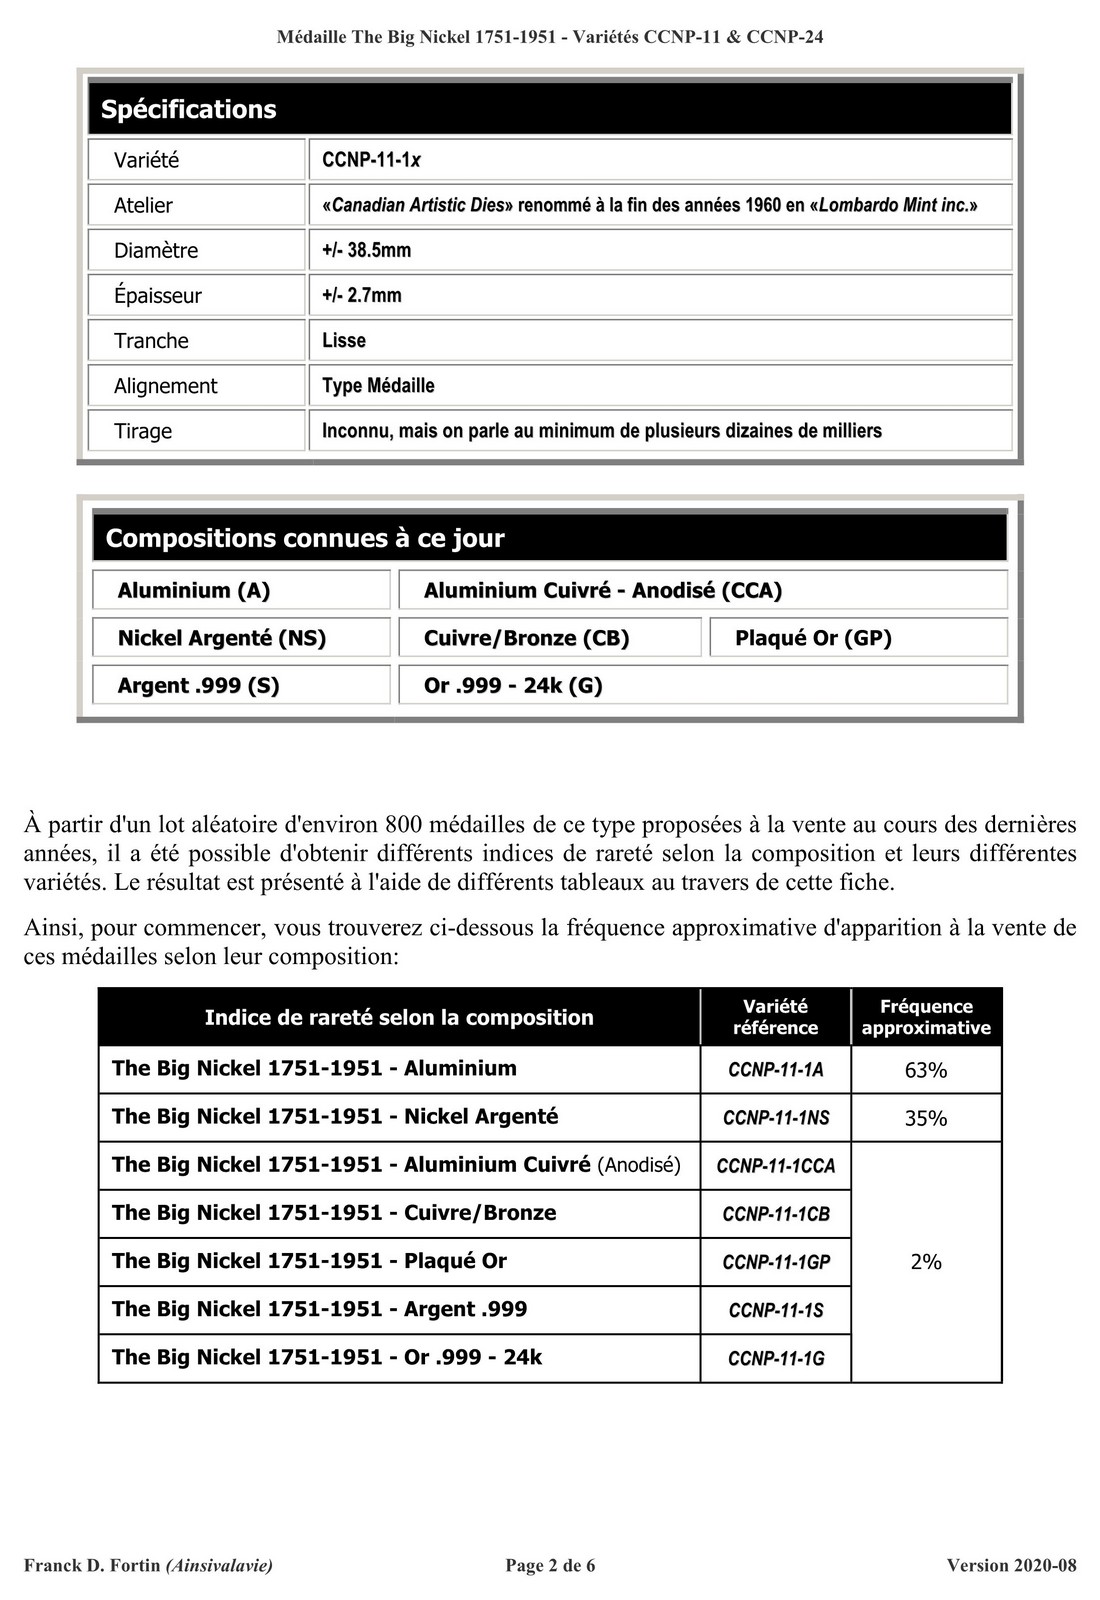 Web - Fiche Test - The Big Nickel (CCNP-11 & CCNP-24) - Page 2.jpg